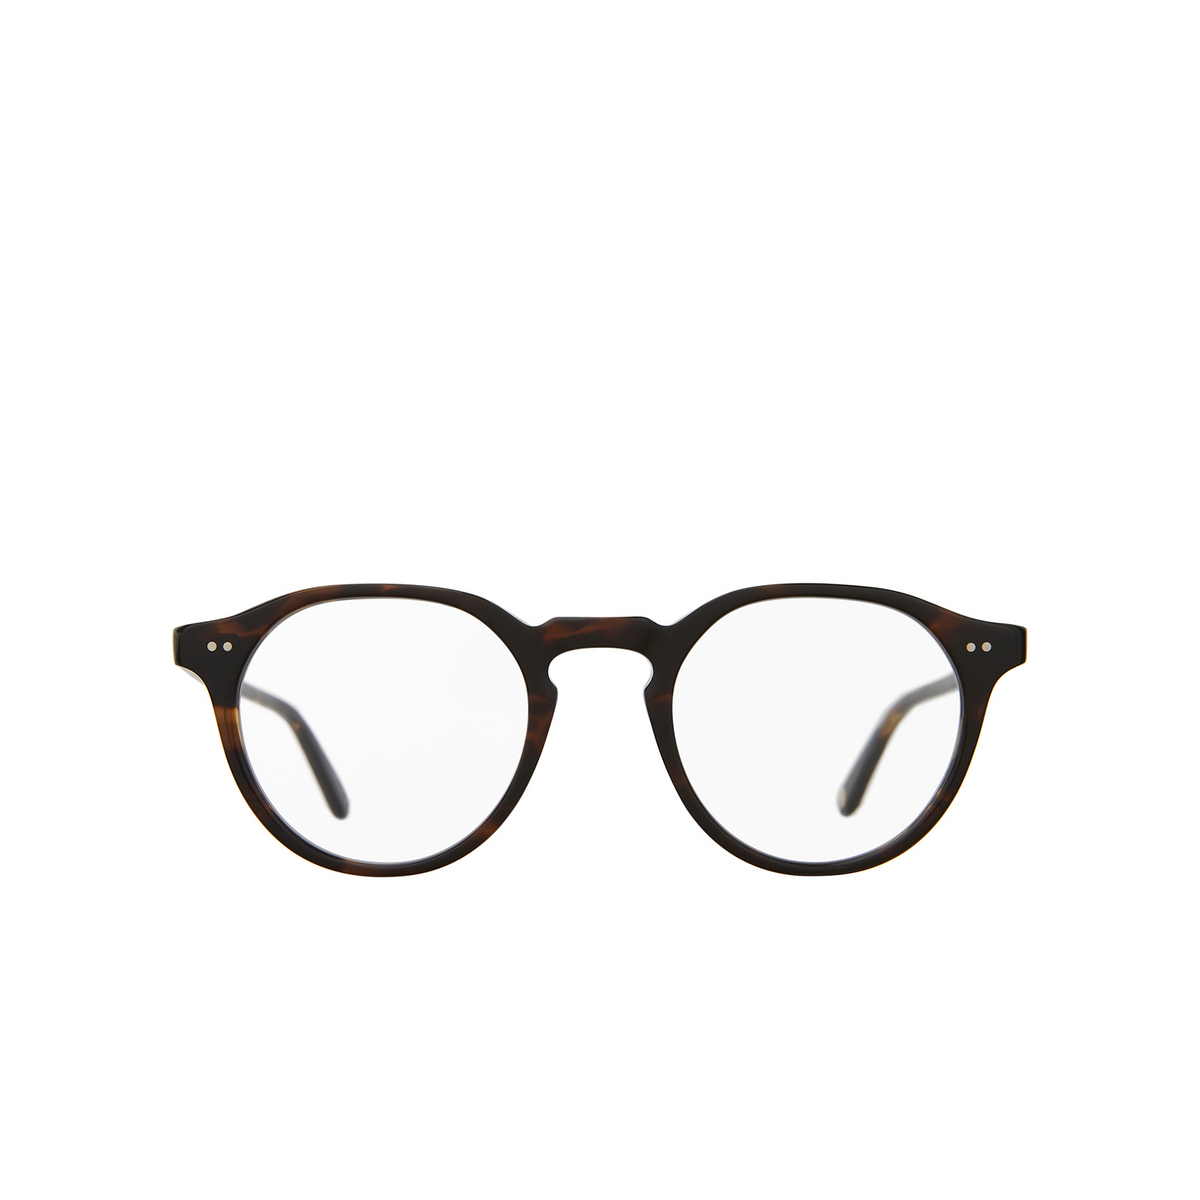 Garrett Leight ROYCE Eyeglasses COFT Coffee Tortoise - front view